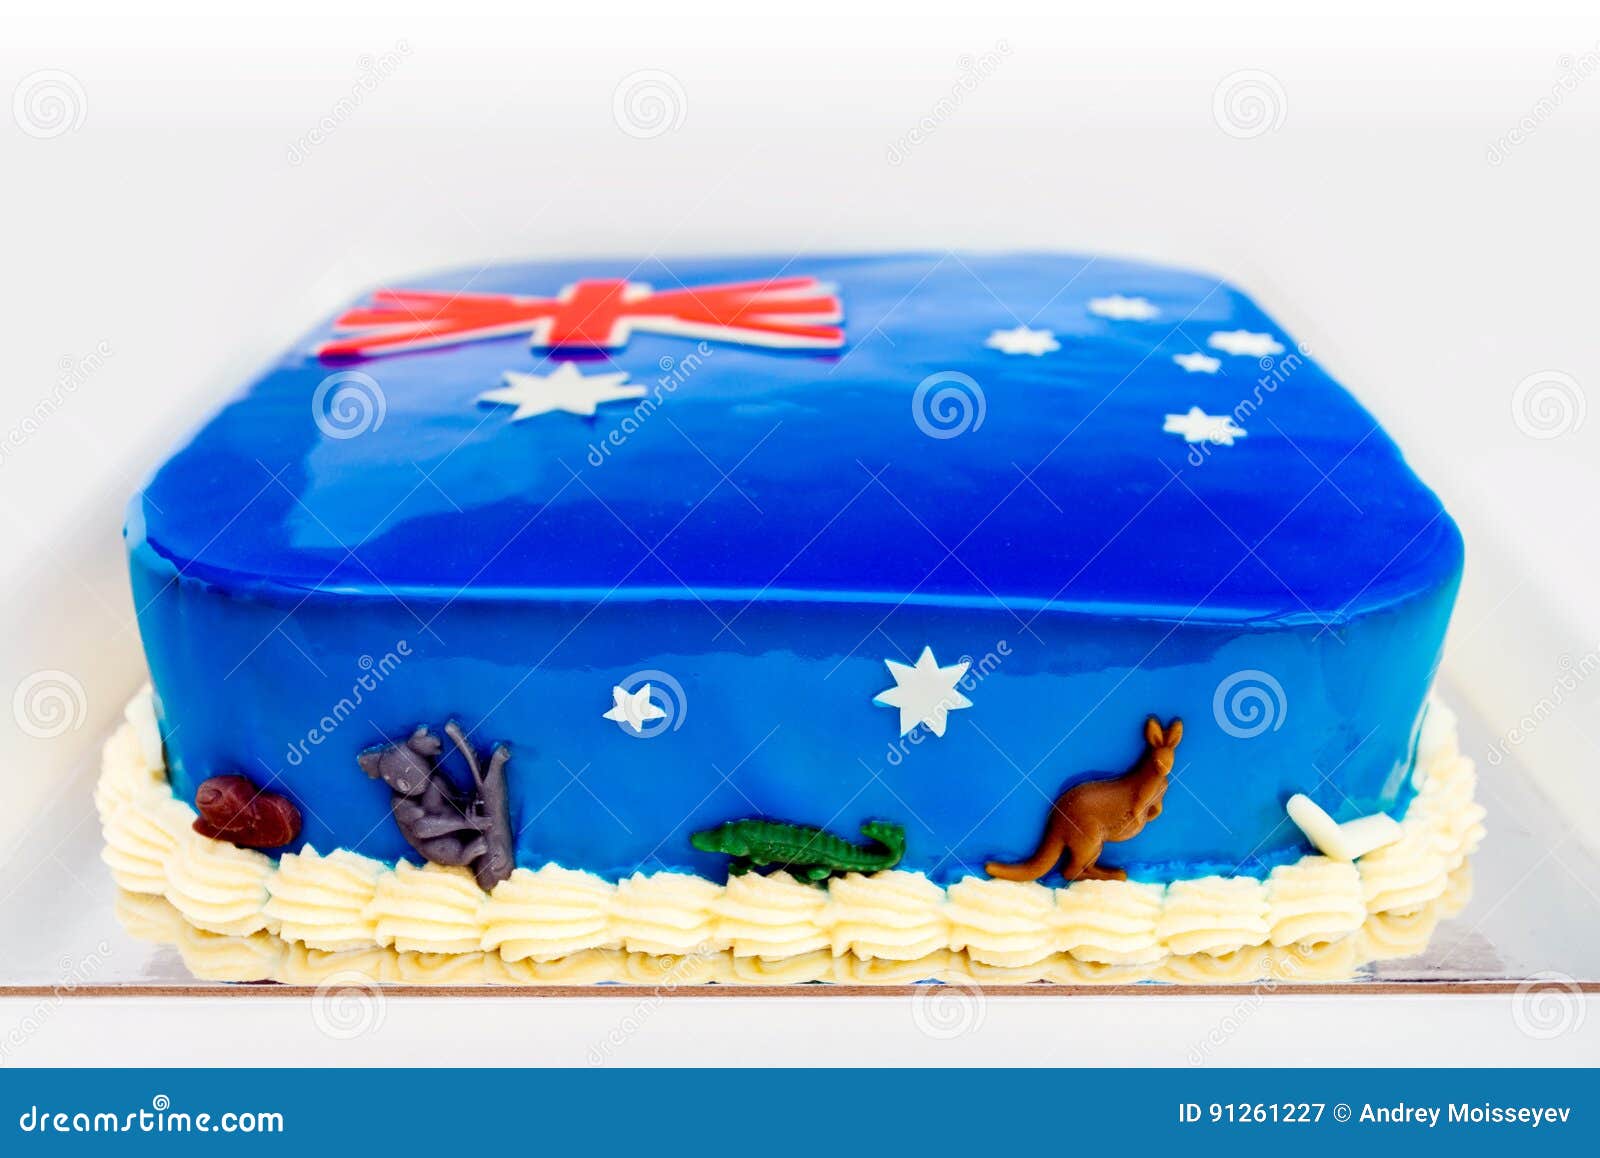 BAKE AUSTRALIA GREAT BY KATHERINE SABBATH — Cakers Warehouse